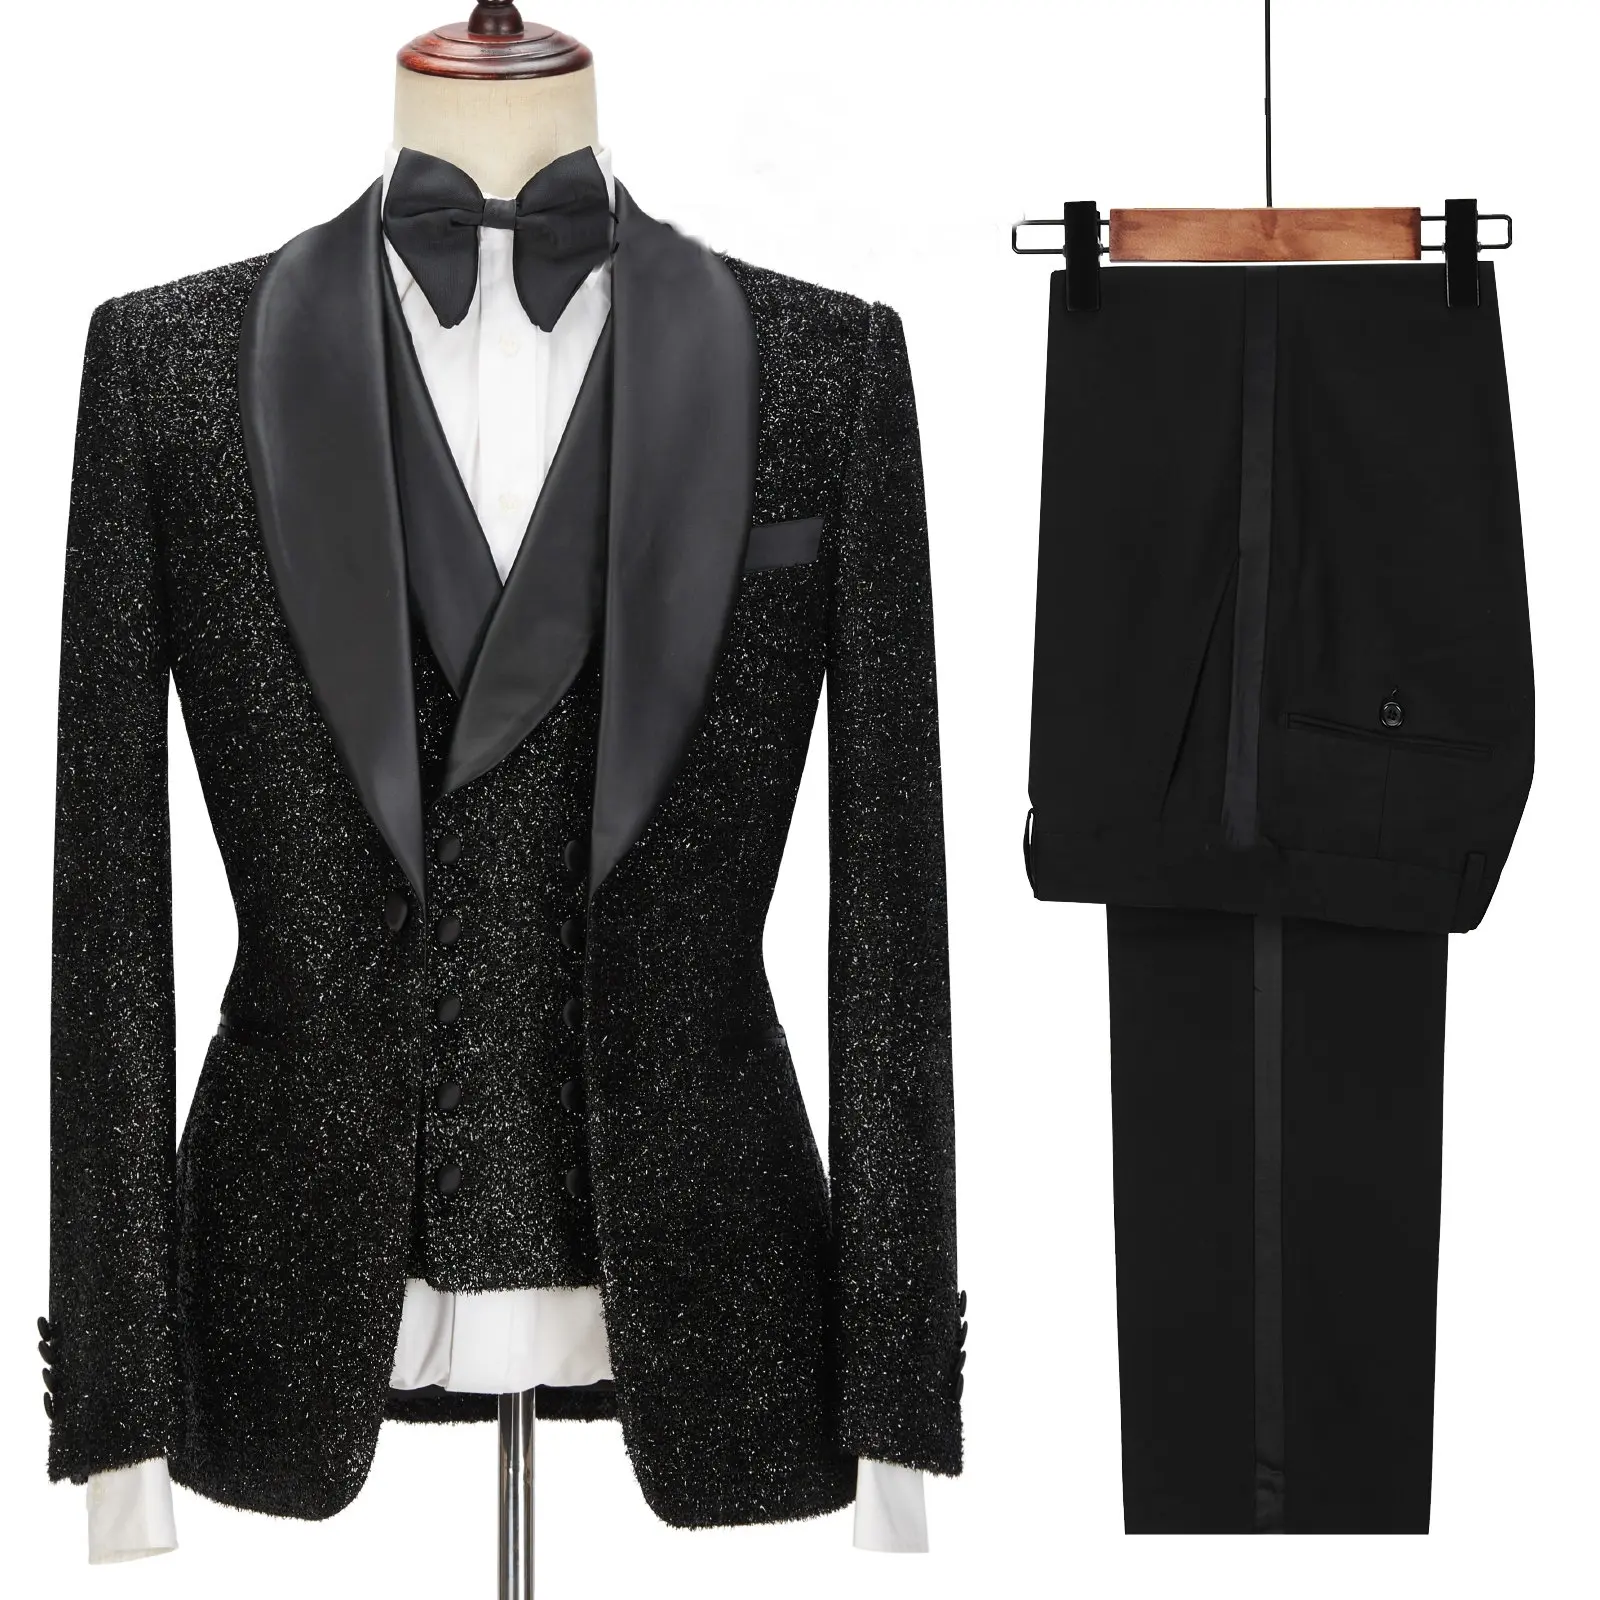 JELTONEWIN-Custom-Made-Fashion-Shiny-Black-Men-Suits-3-Pieces-Shawl ...